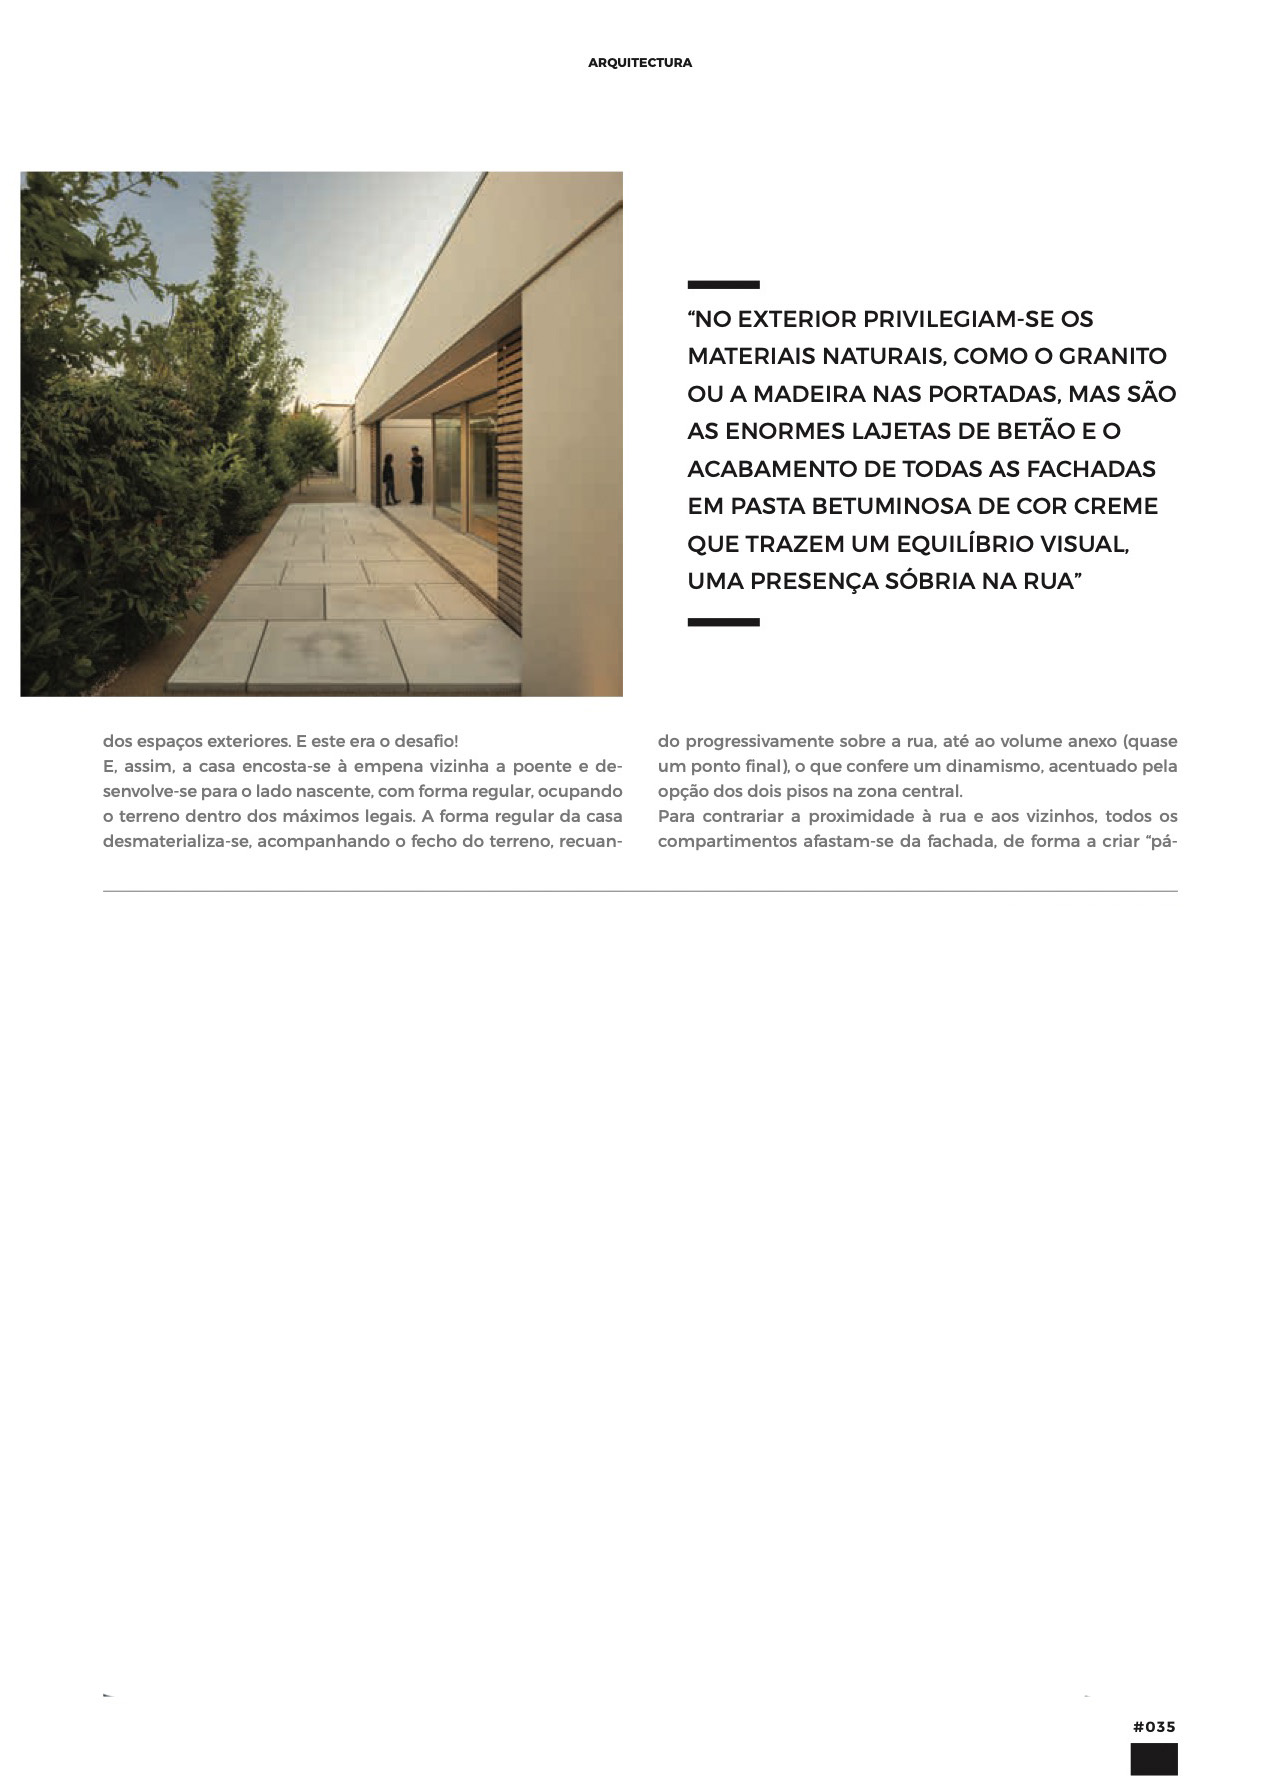 Revista Traço #449 do atelier Mutant Architecture and Design com fotografia arquitetura de ivo tavares studio - architectural photography